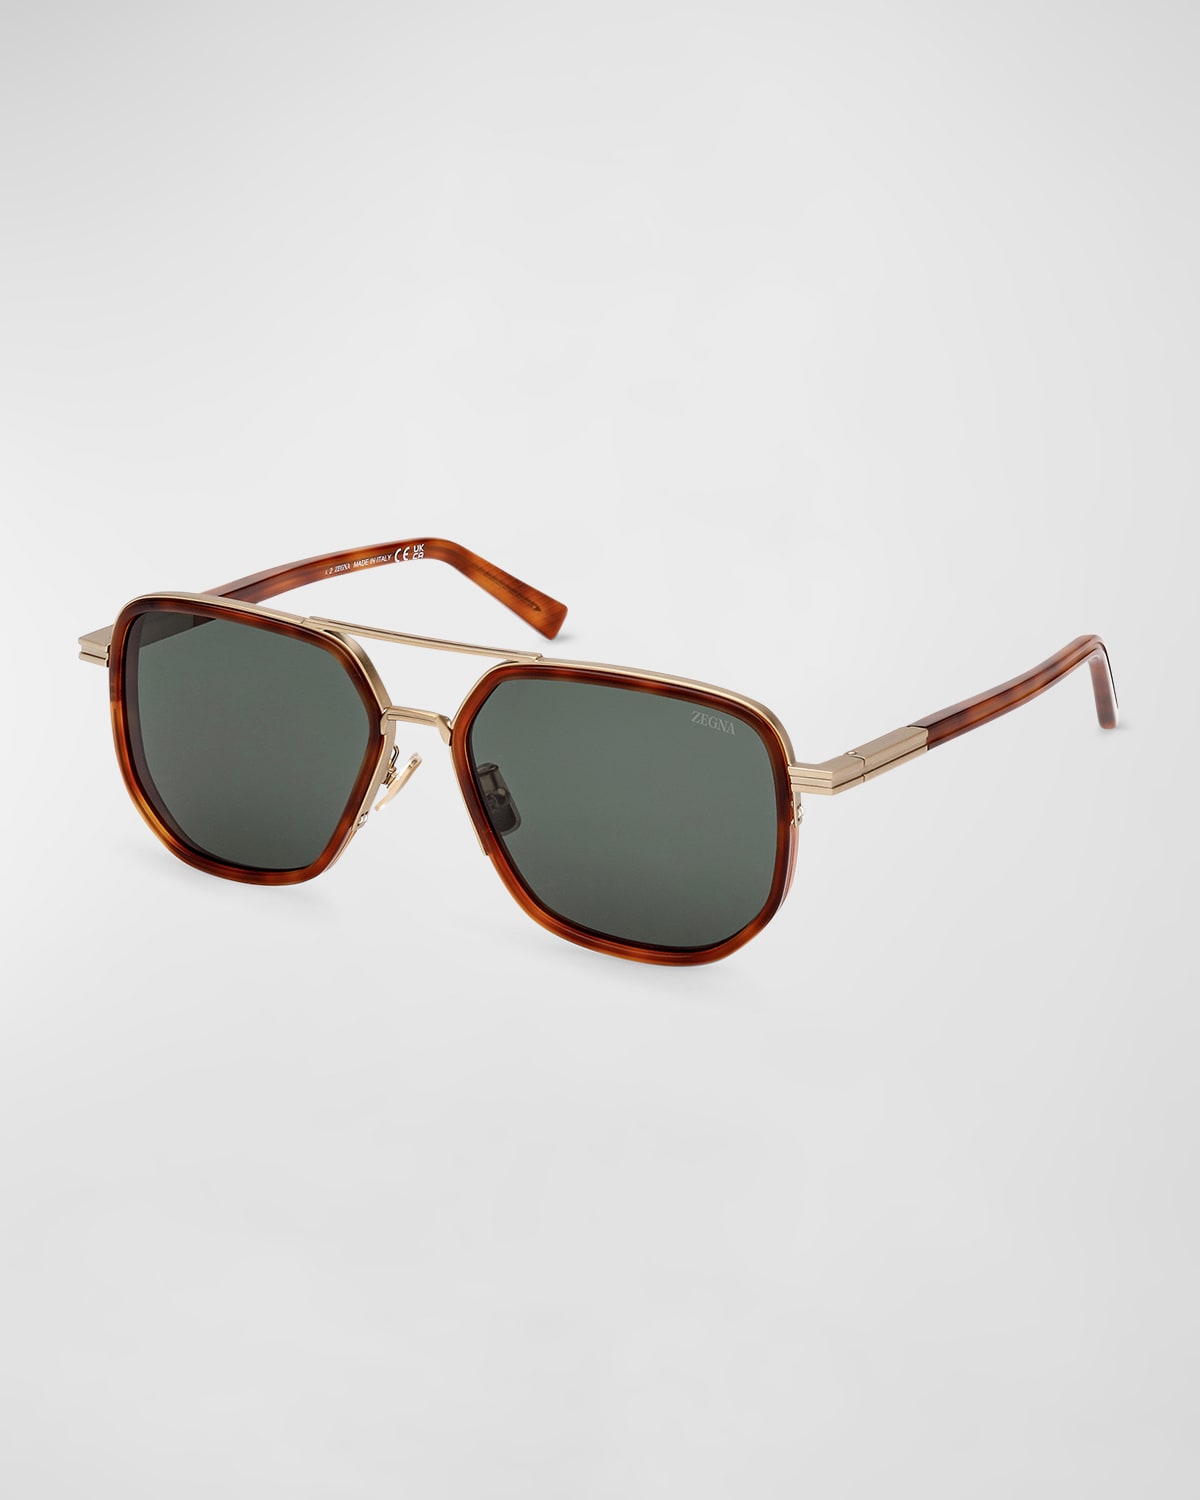 Zegna Men's 59mm Square Metal Sunglasses In Classic Havana Green